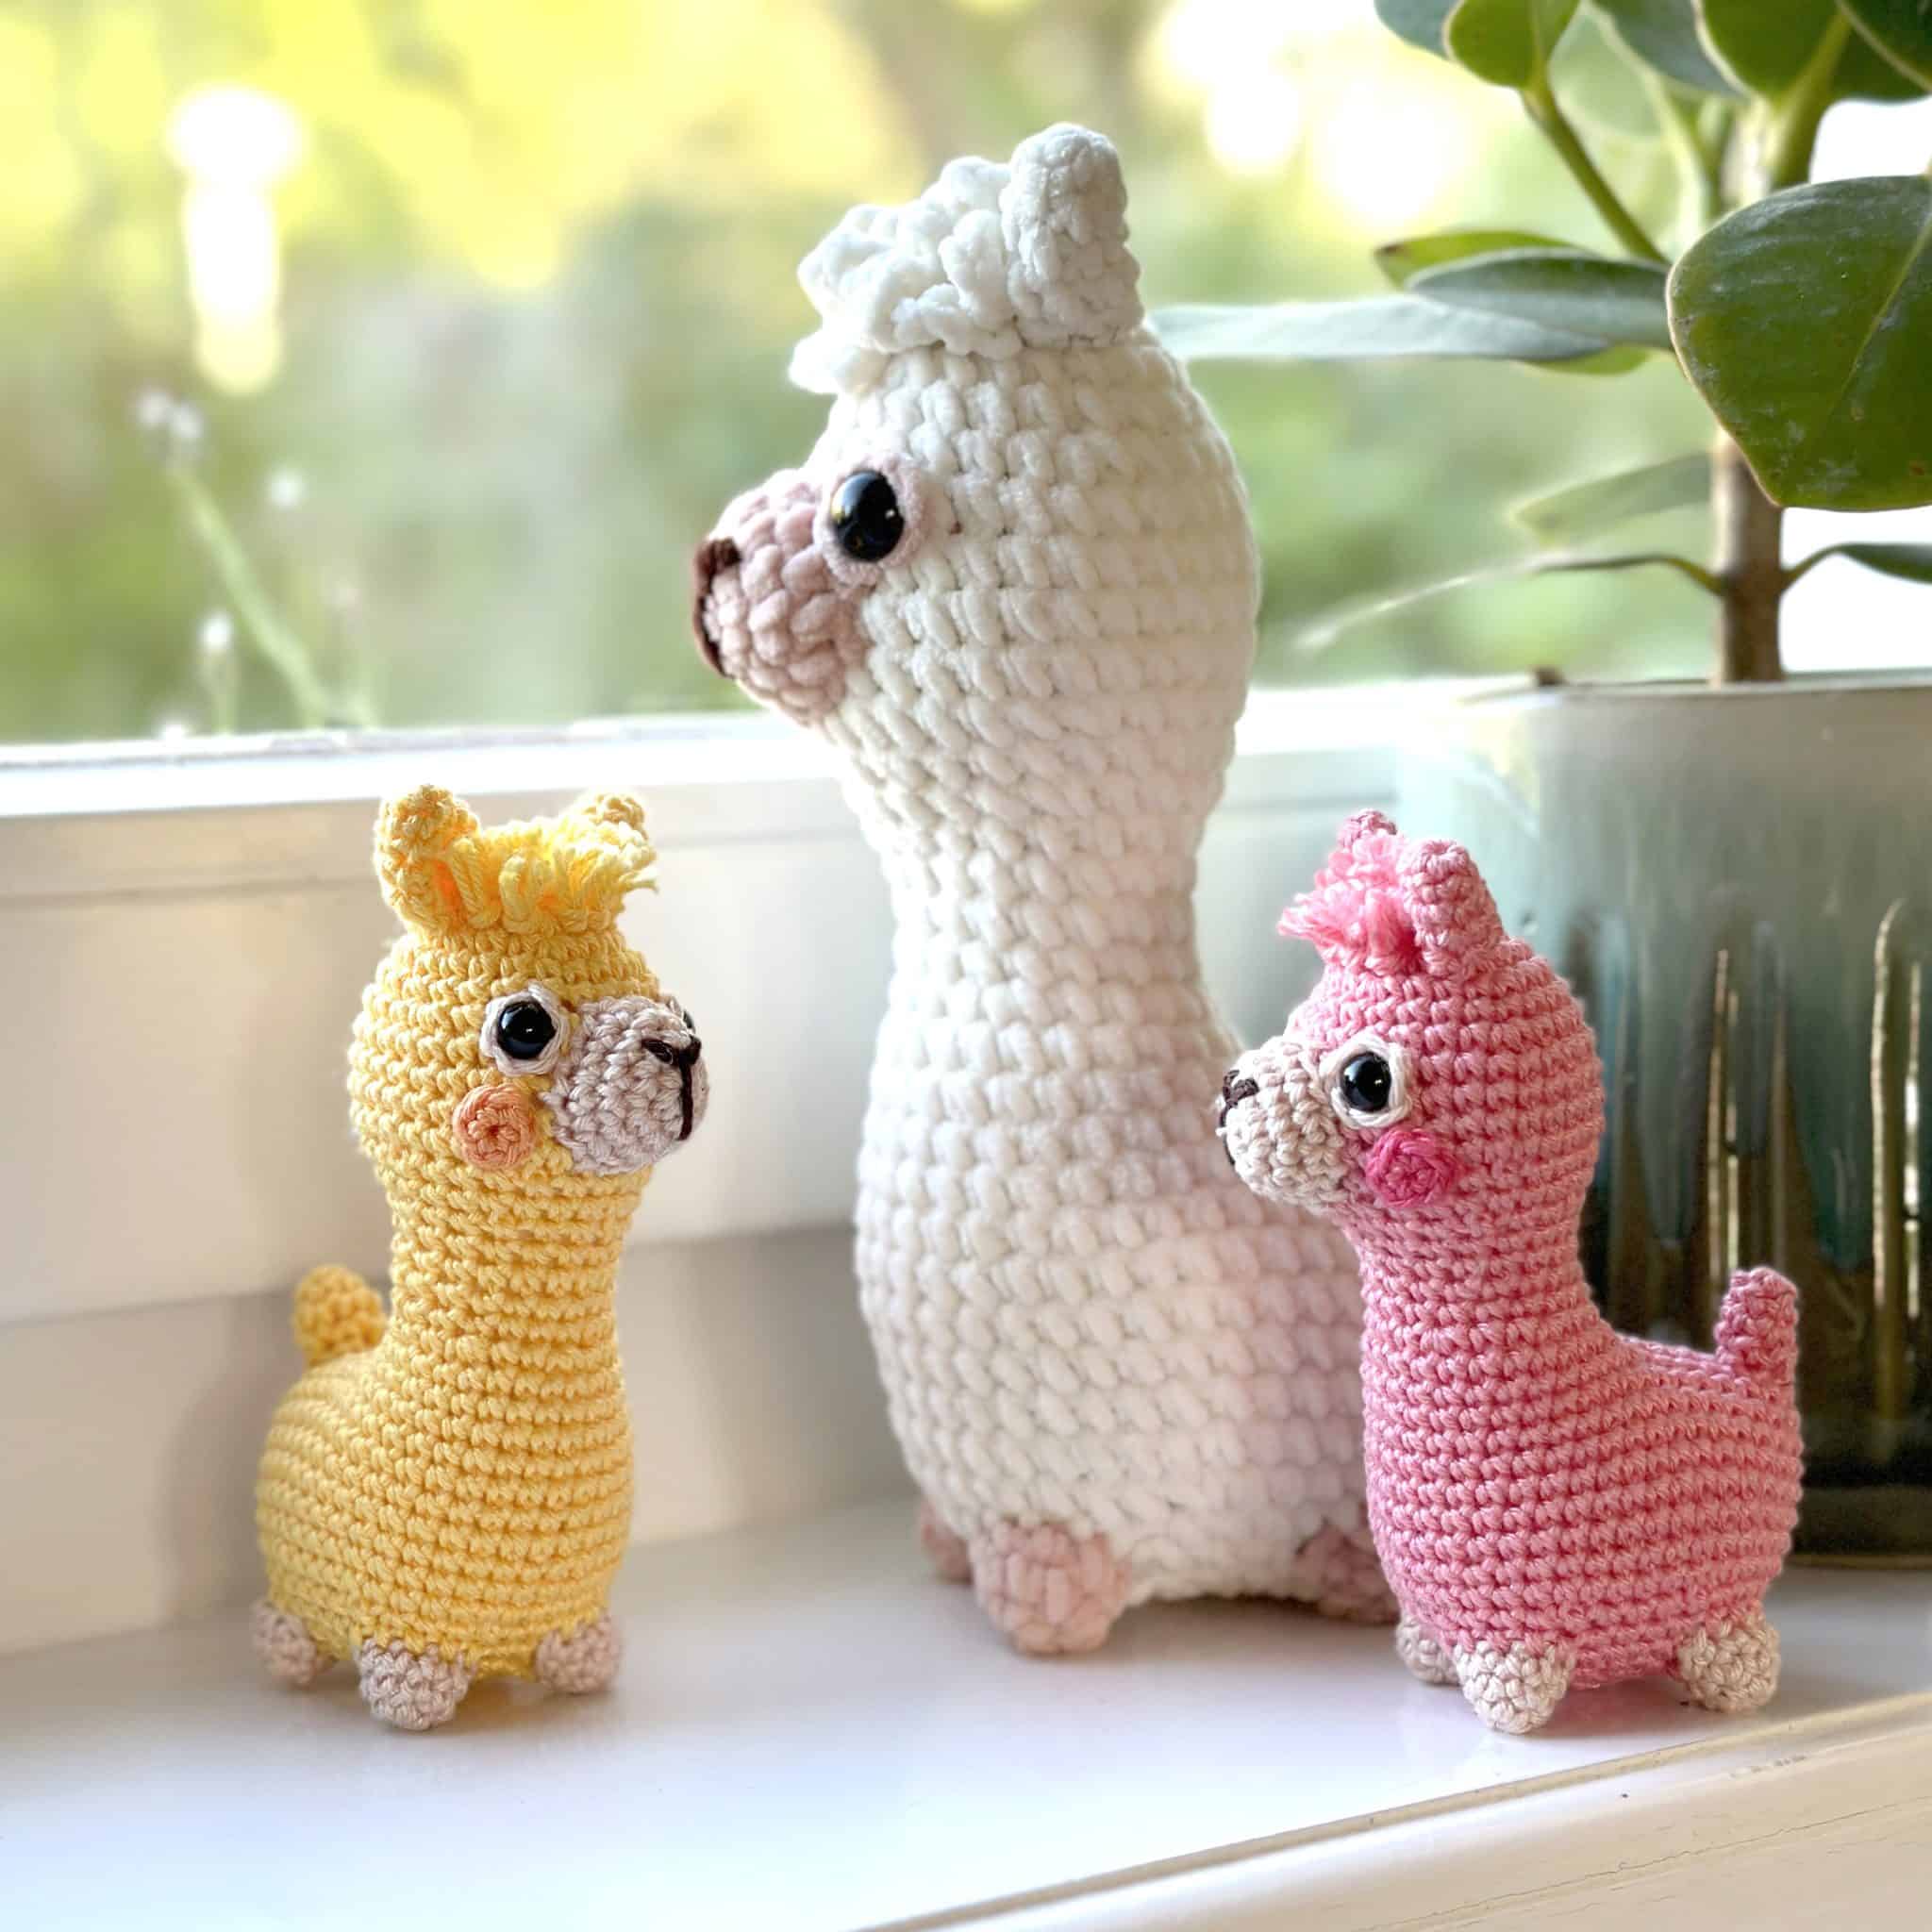 Stuffed Animal Crochet Patterns: Easy Crochet Animal Patterns For  Beginners: Crochet Patterns For Stuffed Animals – Amigurumi See more